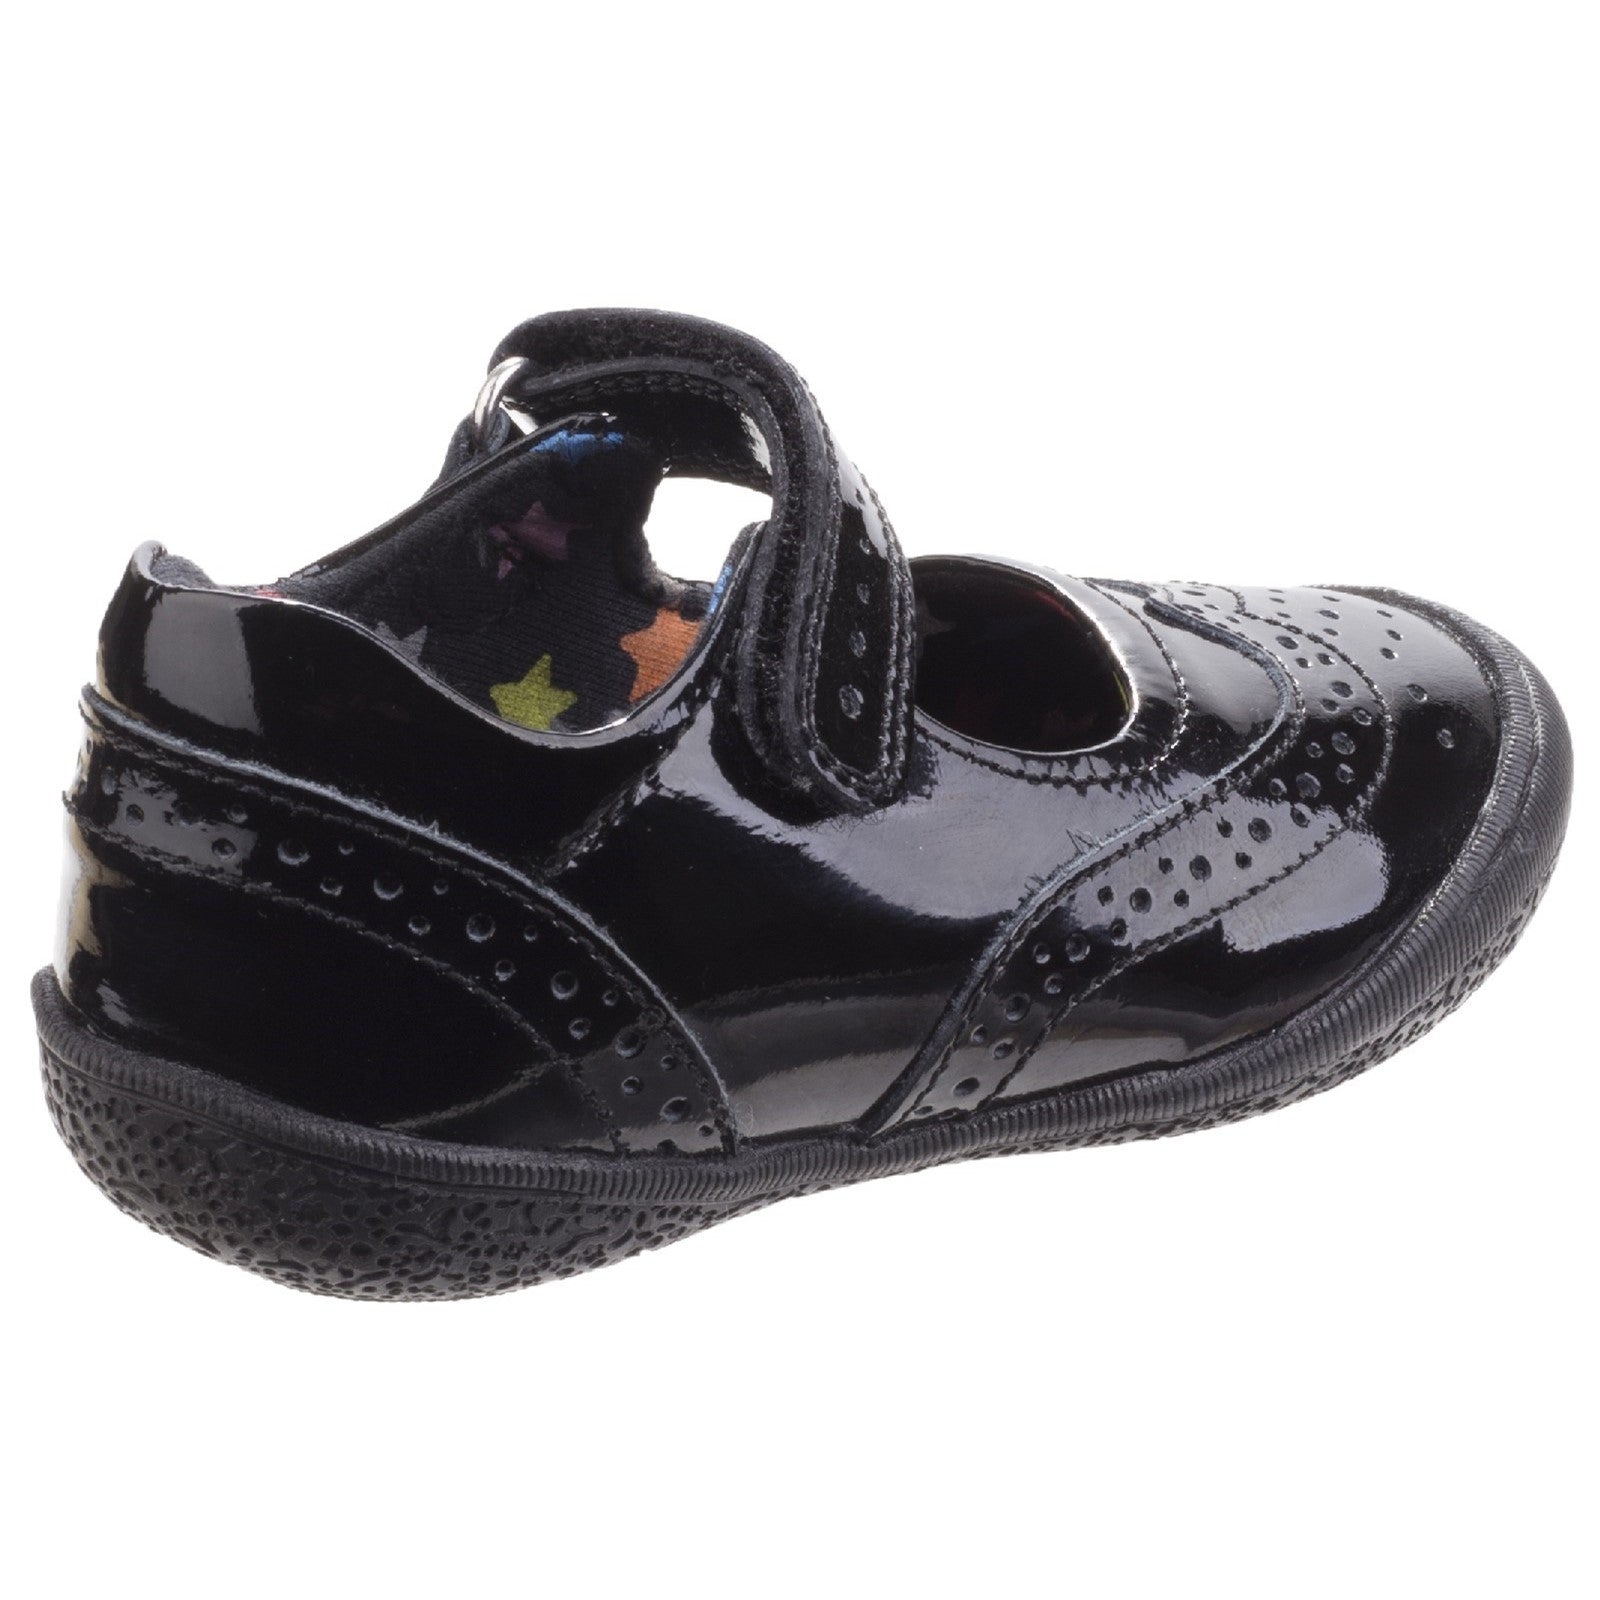 Hush Puppies Girls Rina Patent Leather School Shoes - Black